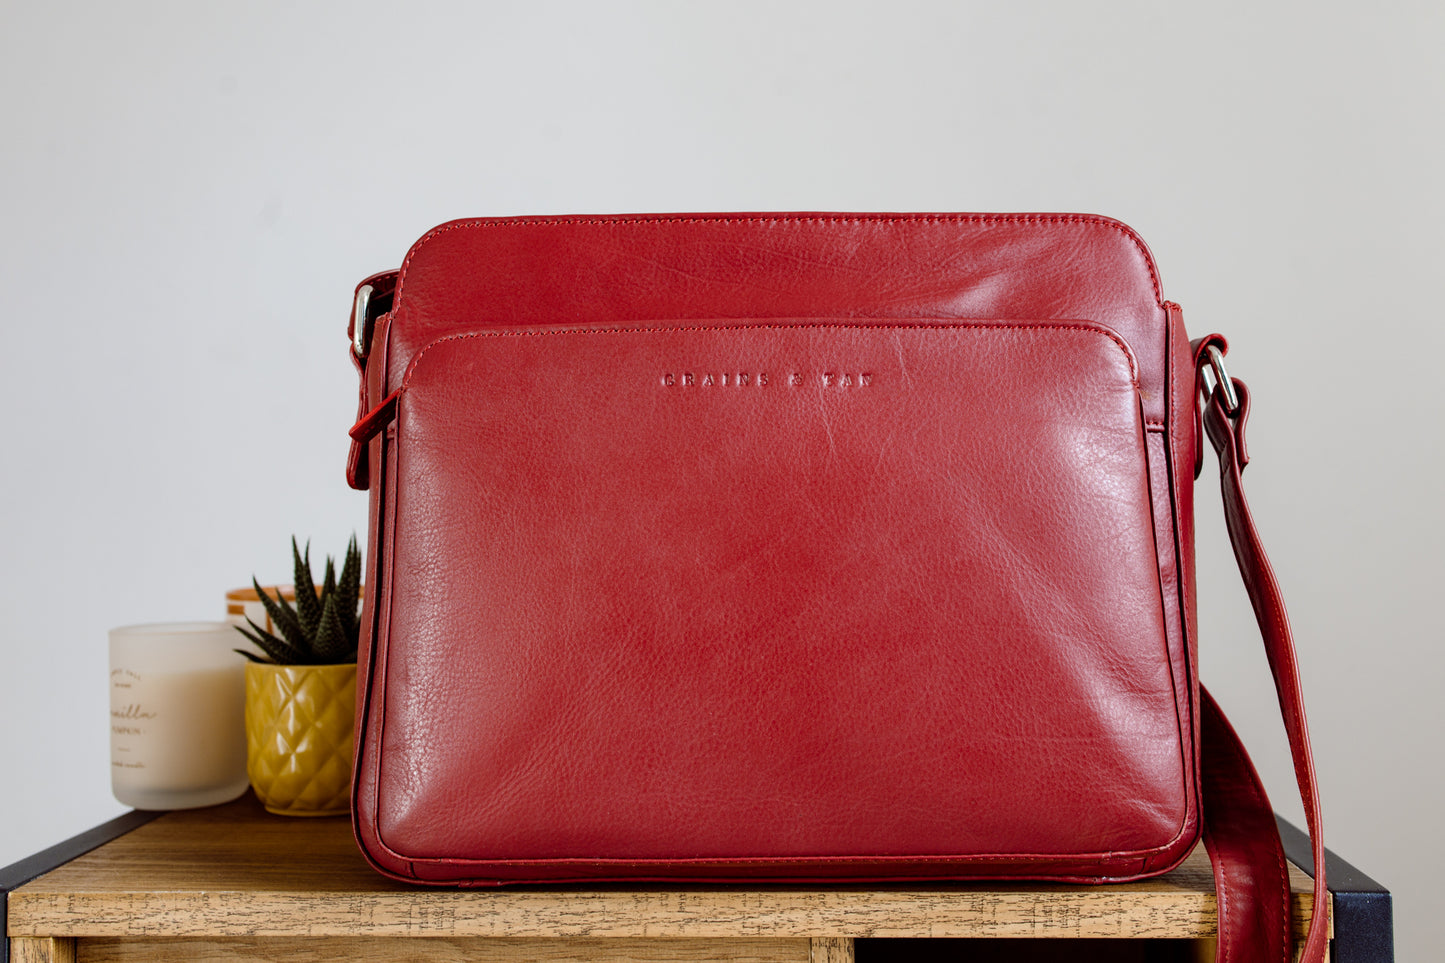 GT-H84: G&T Full-grain Leather Large Multi-Compartment Handbag with Long Adjustable Shoulder Strap